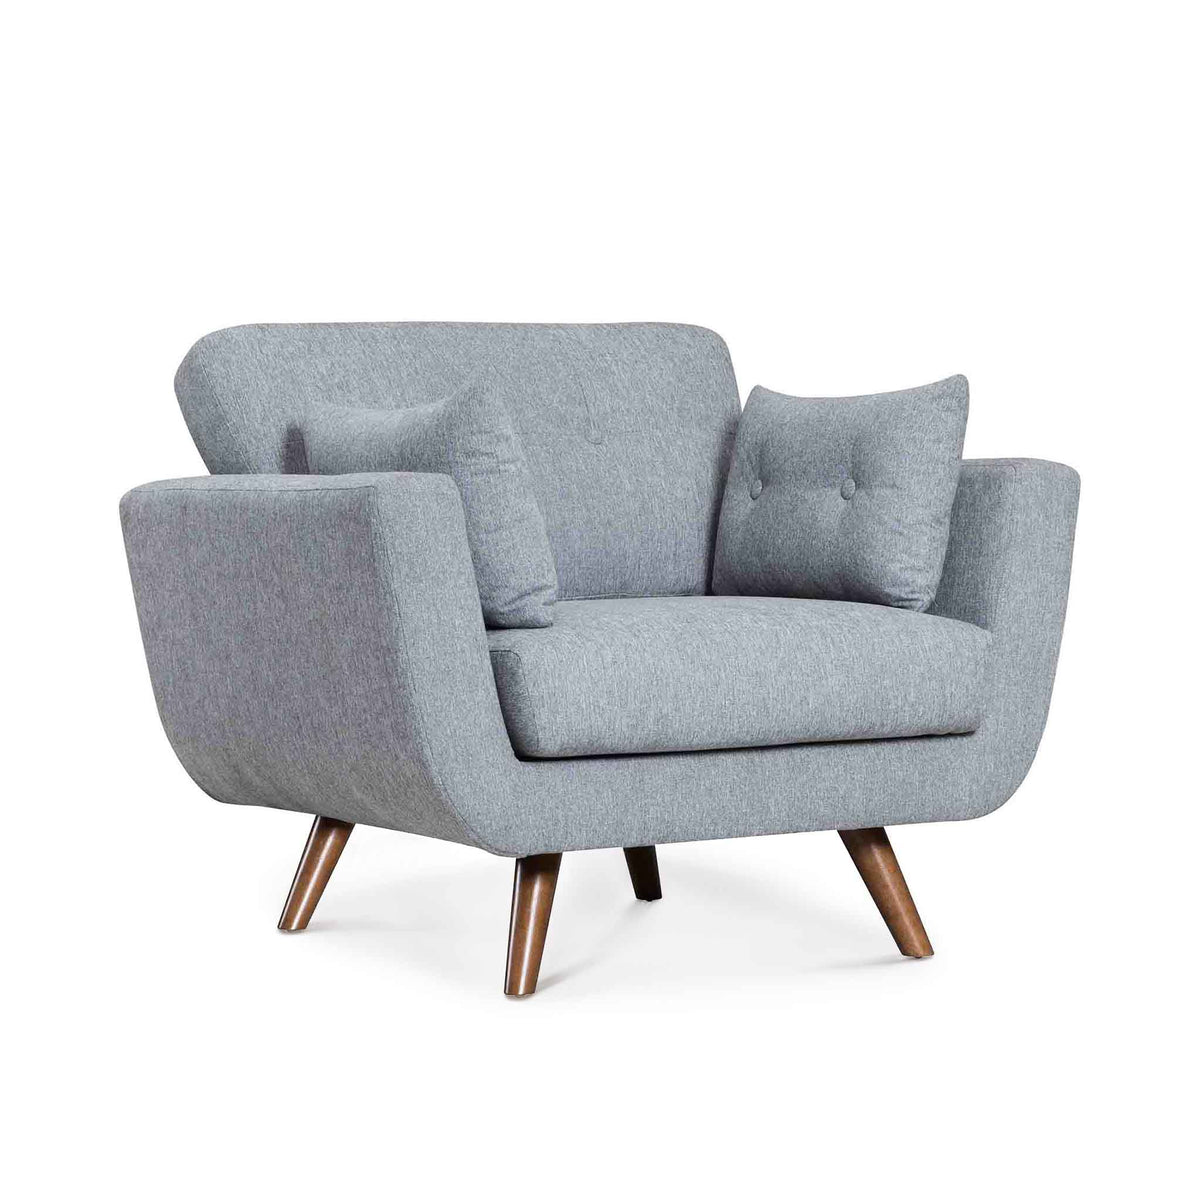 Trom Grey Scandinavian style fabric armchair - Side view